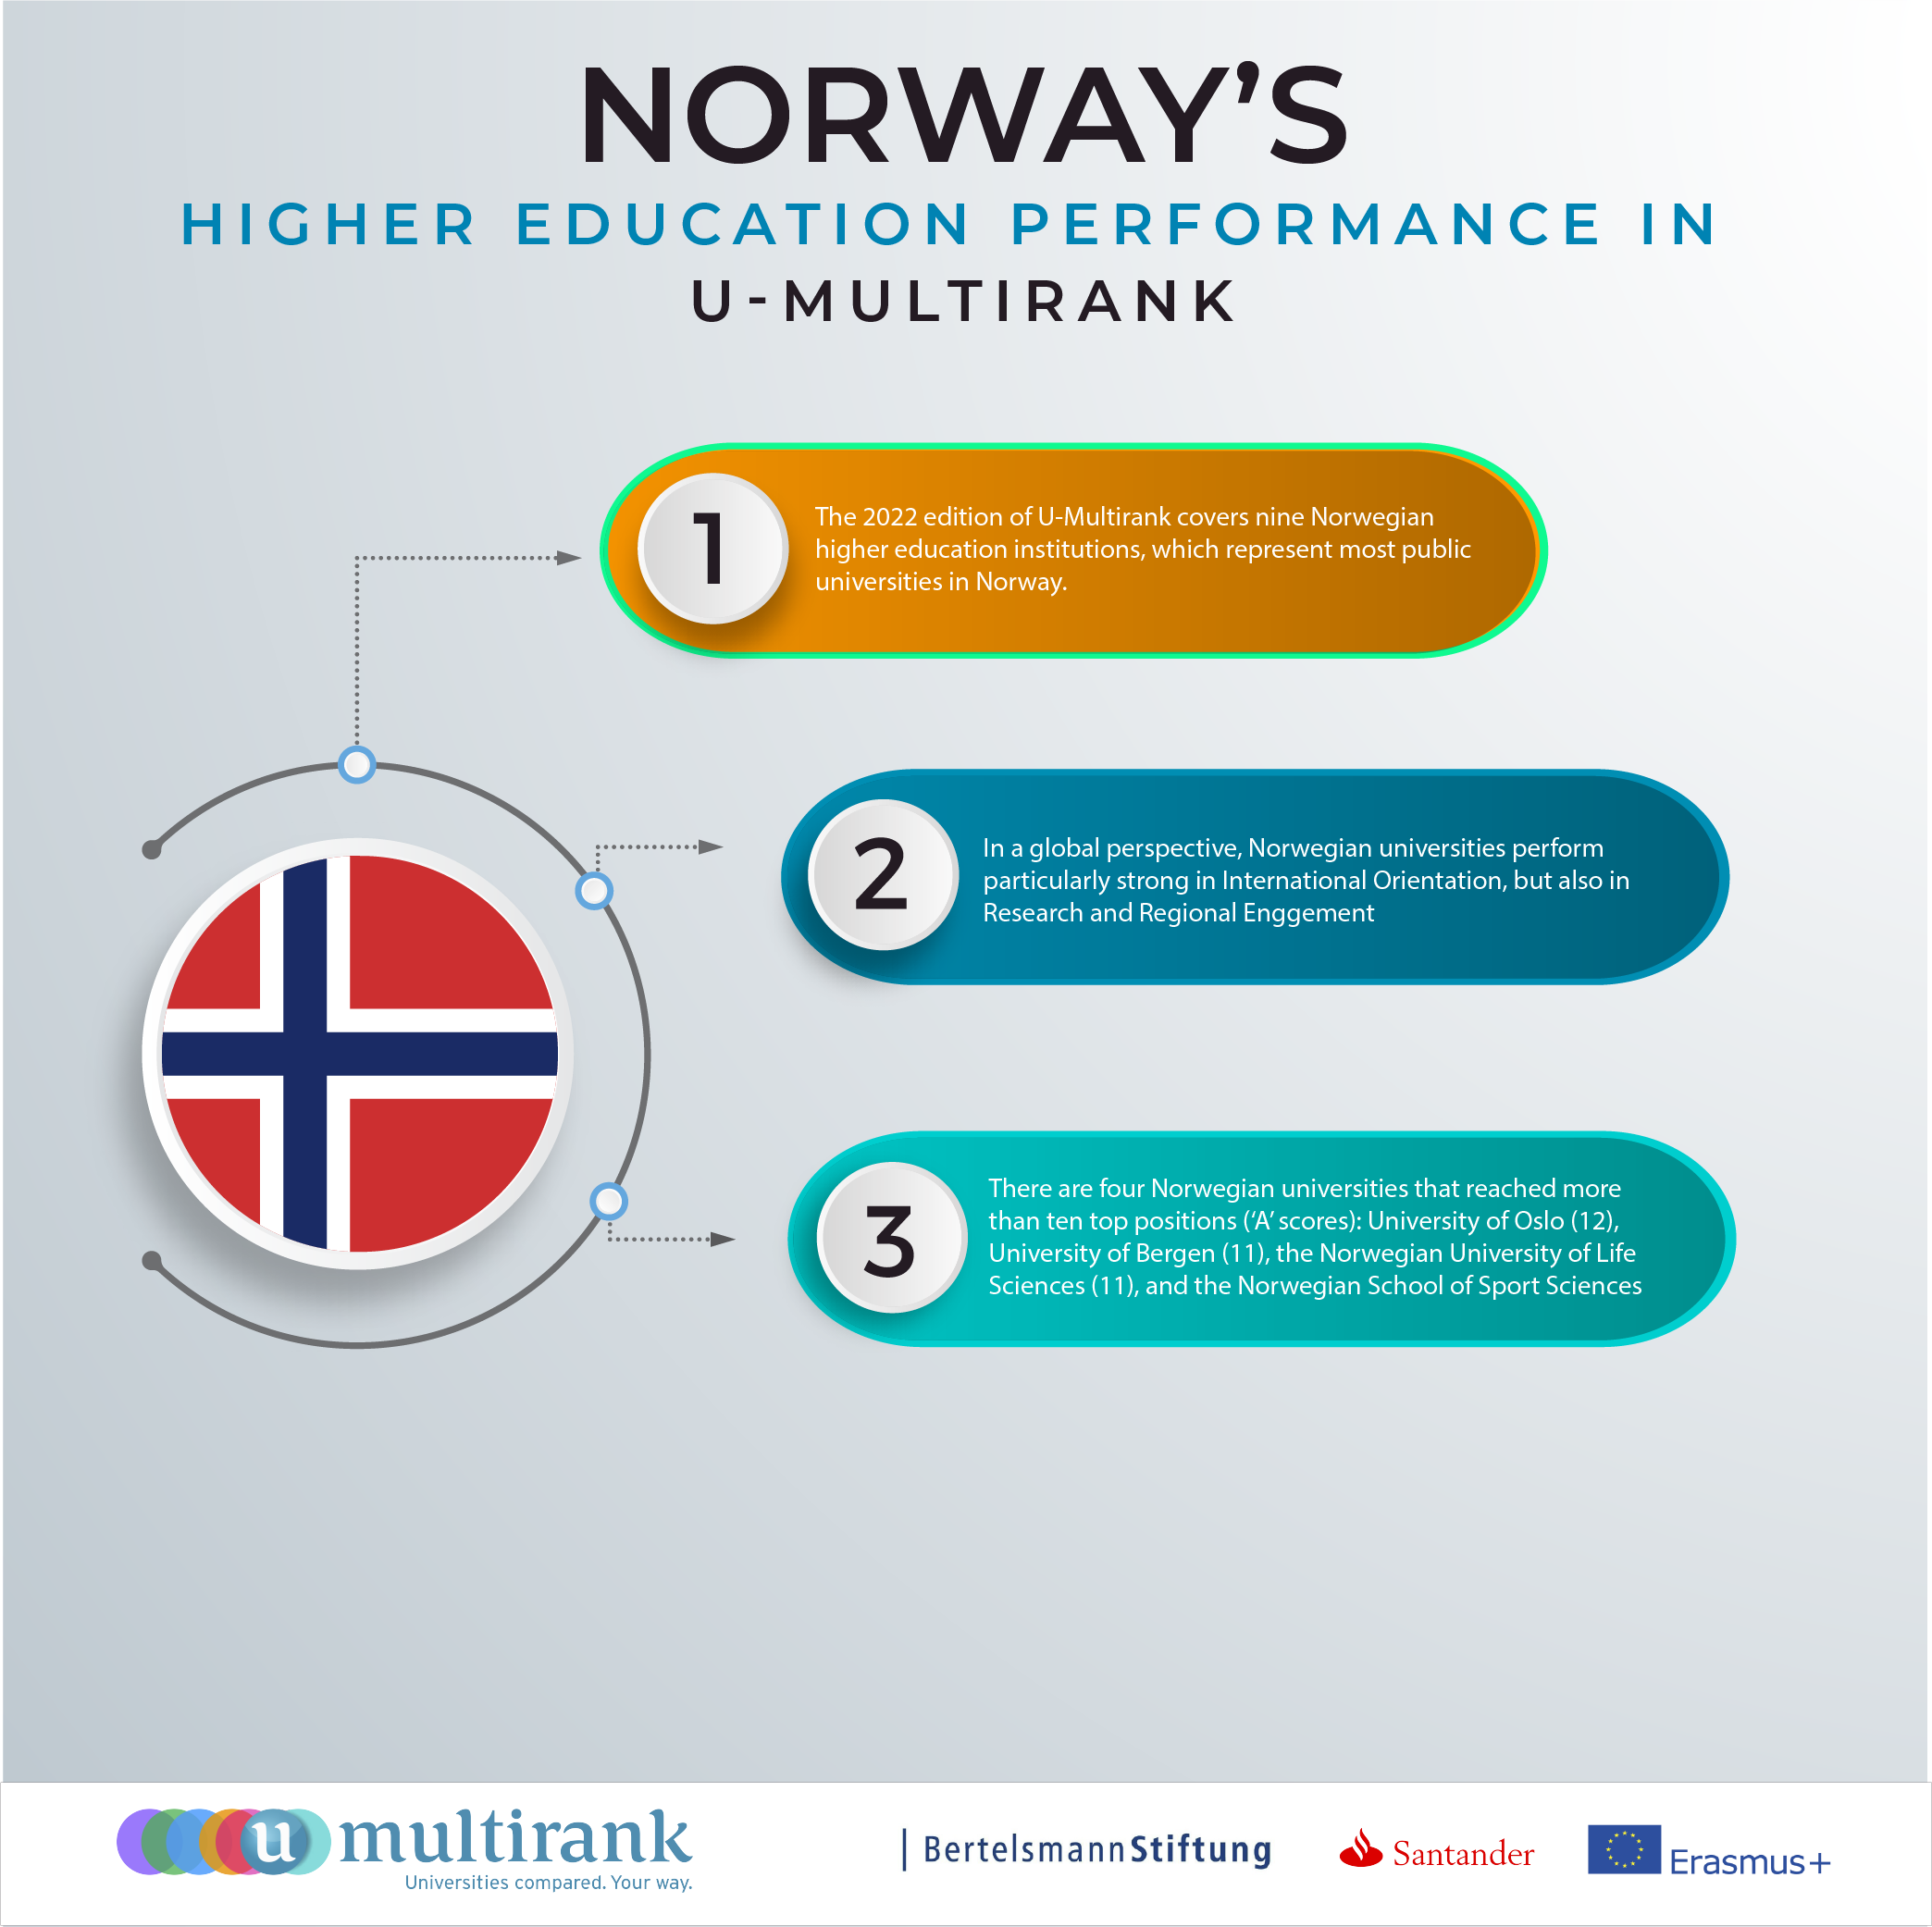 Norway's Higher Education Performance in U-Multirank